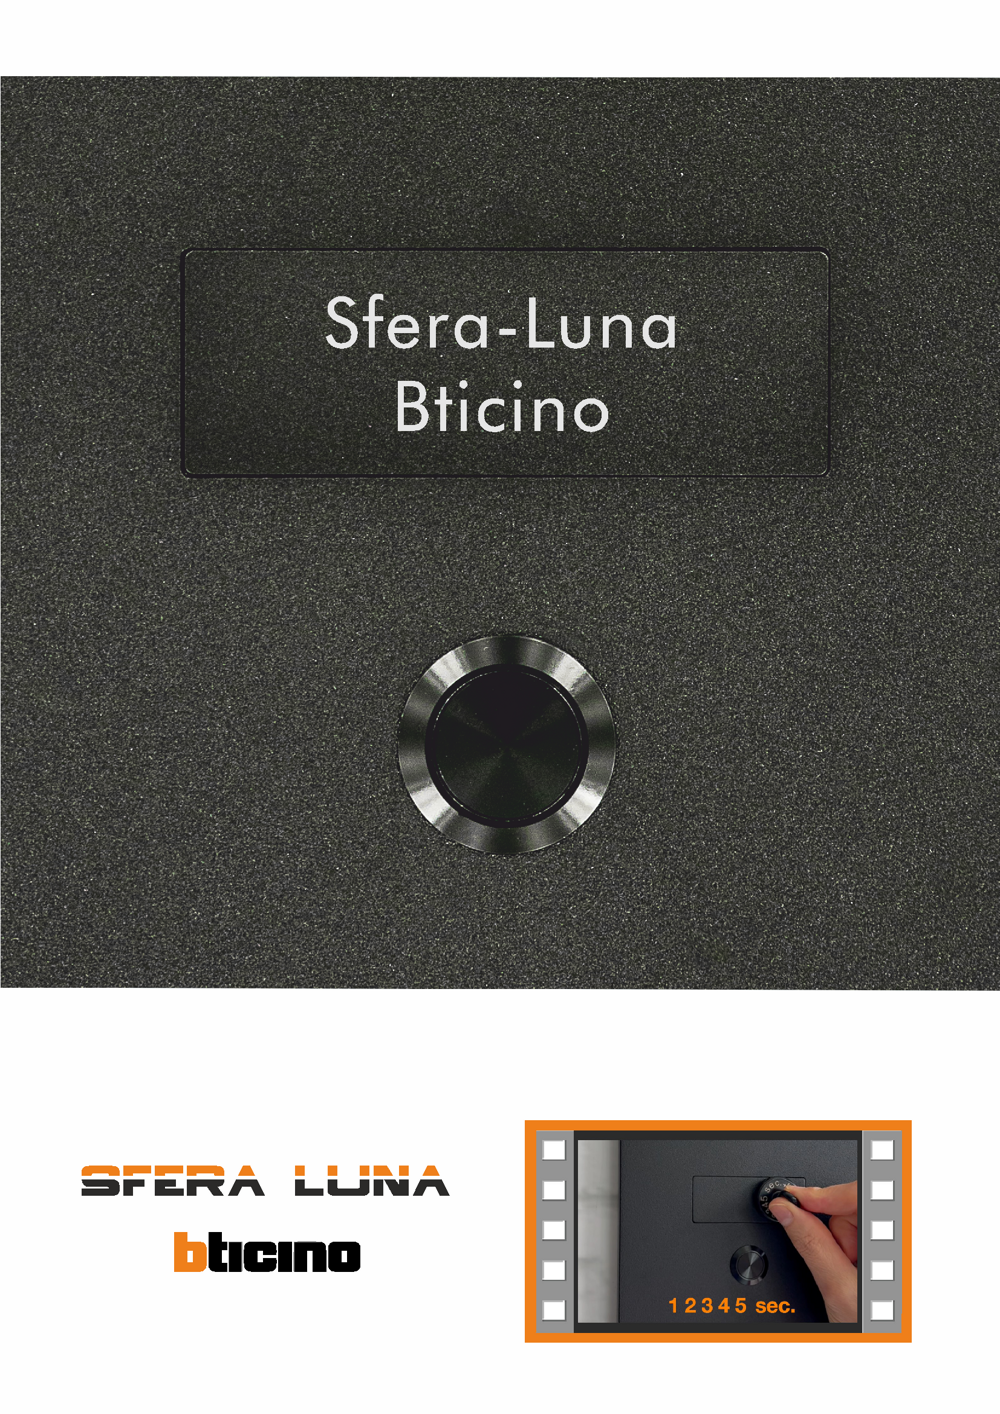 NAME TAG/ PLATE NAME laser engraved SFERA LUNA Bticino